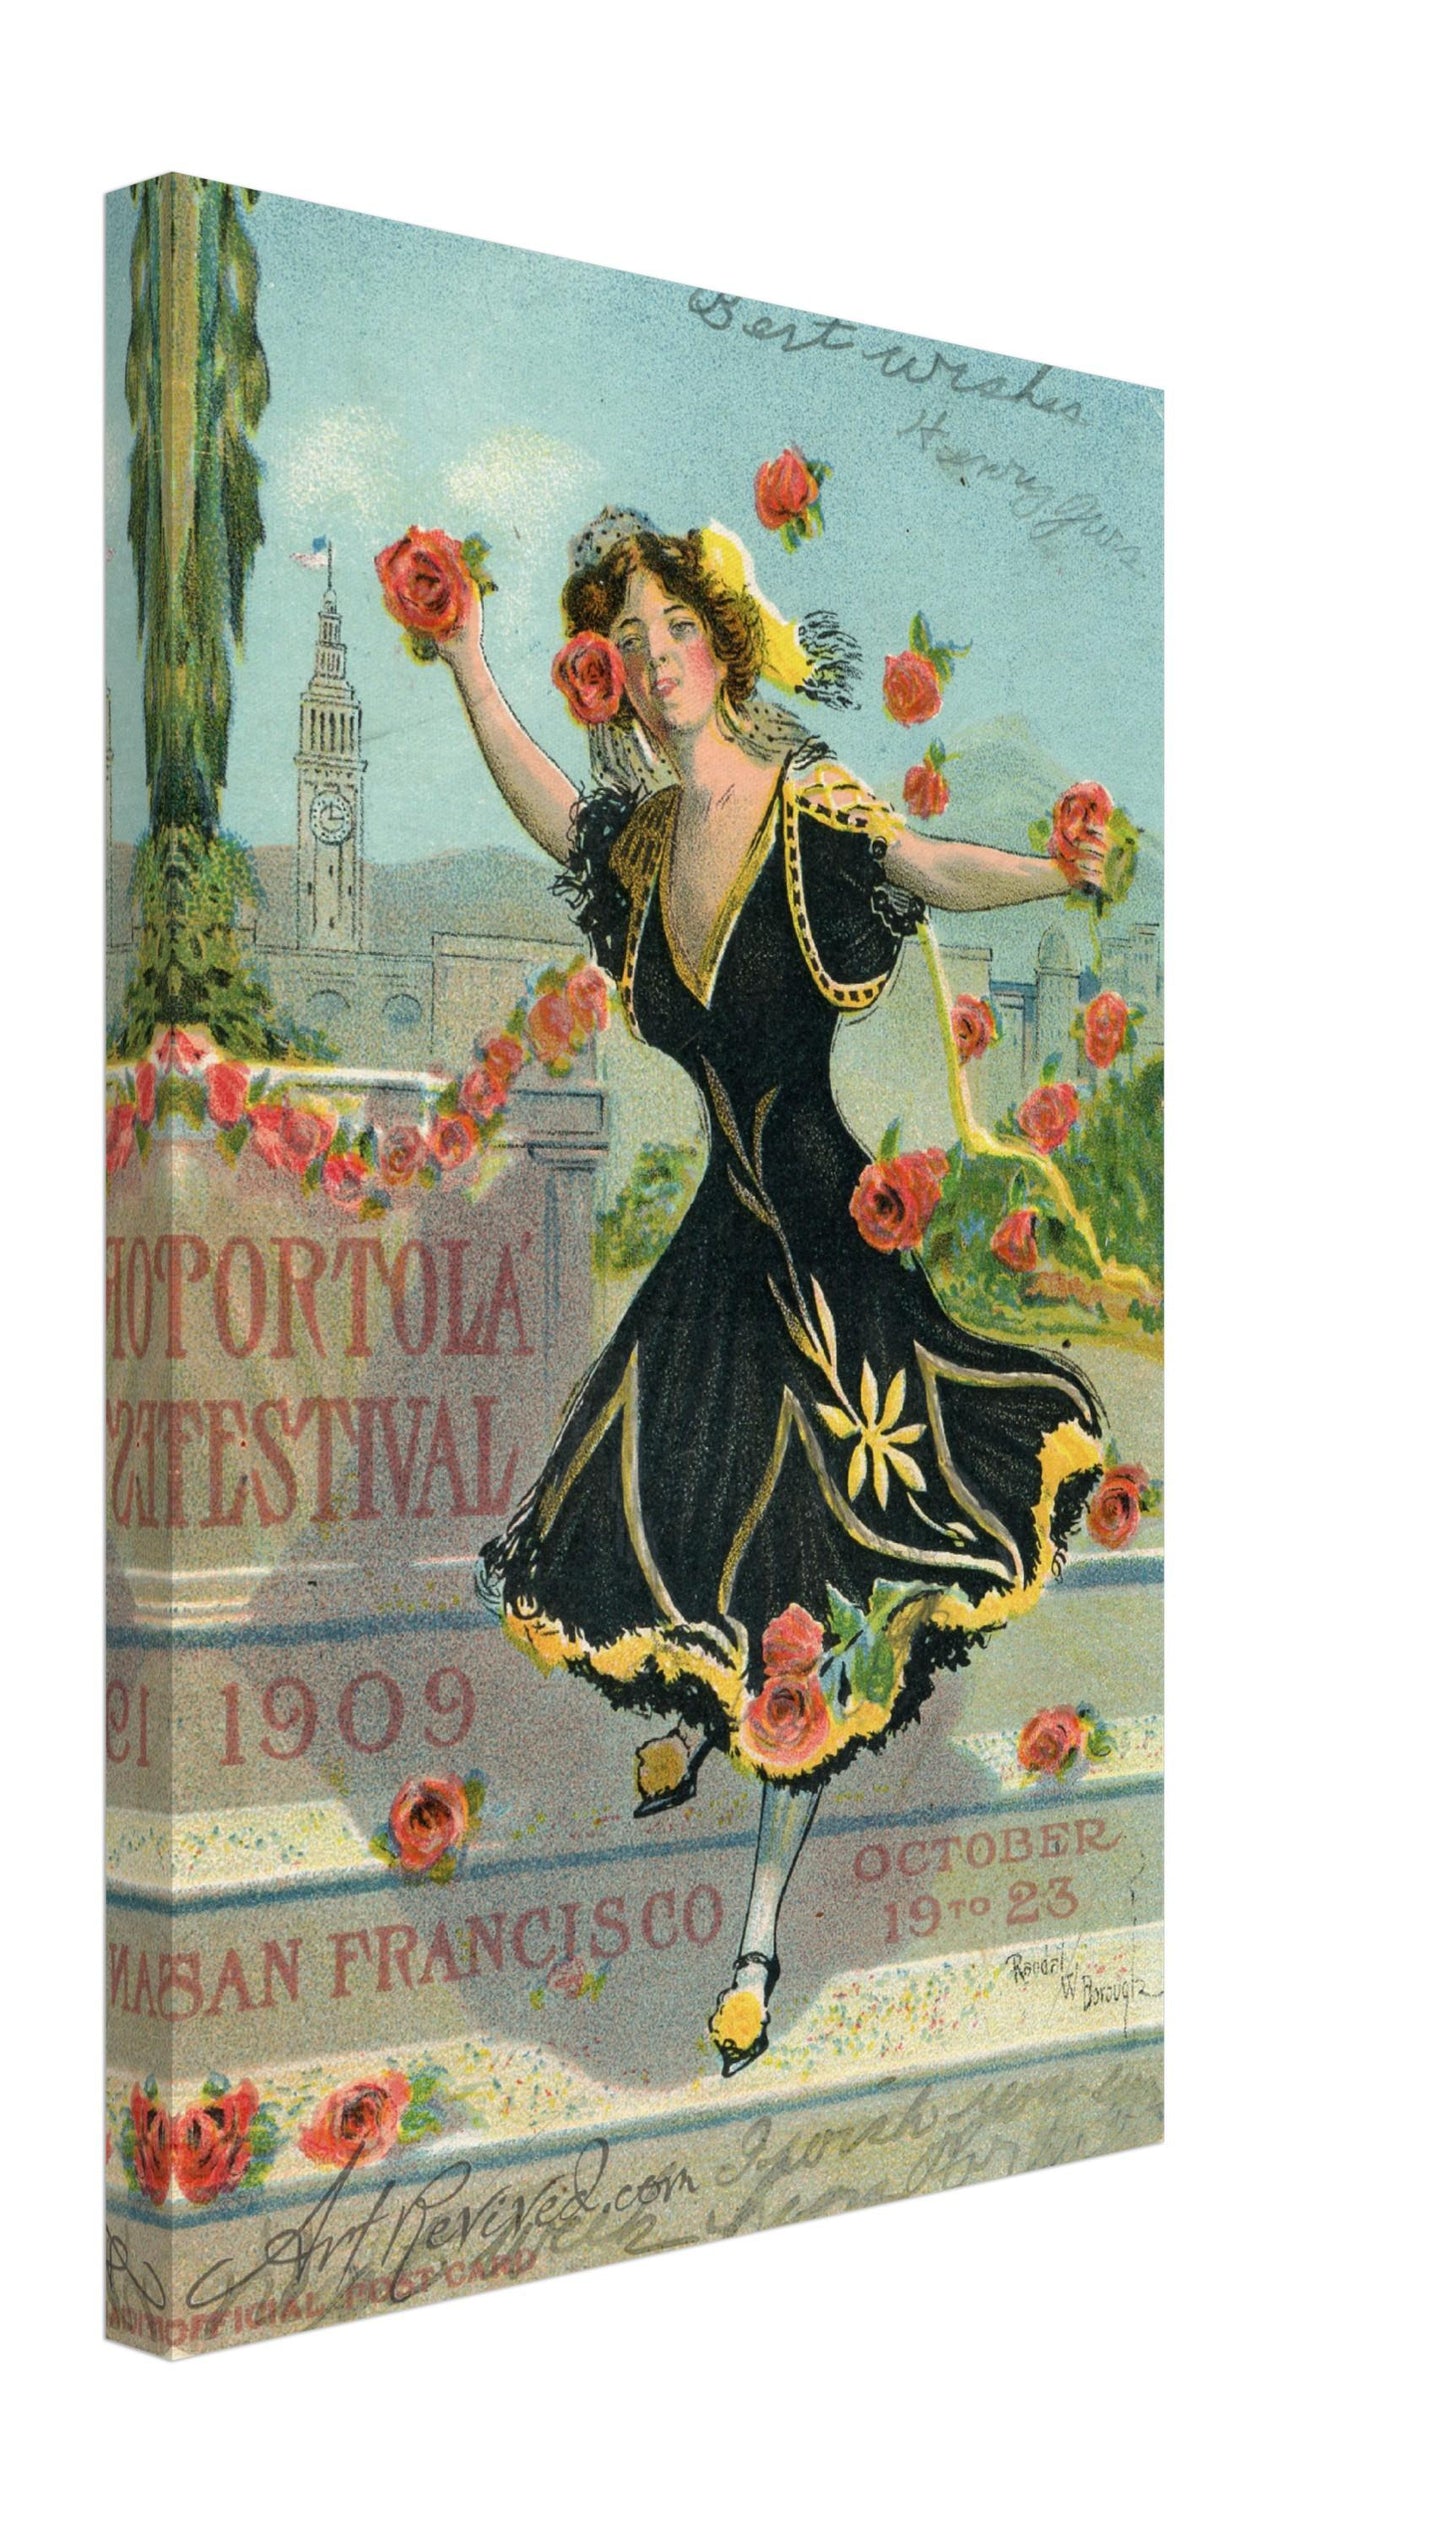 Portola Festival San Francisco Oct 1909  Throwing roses